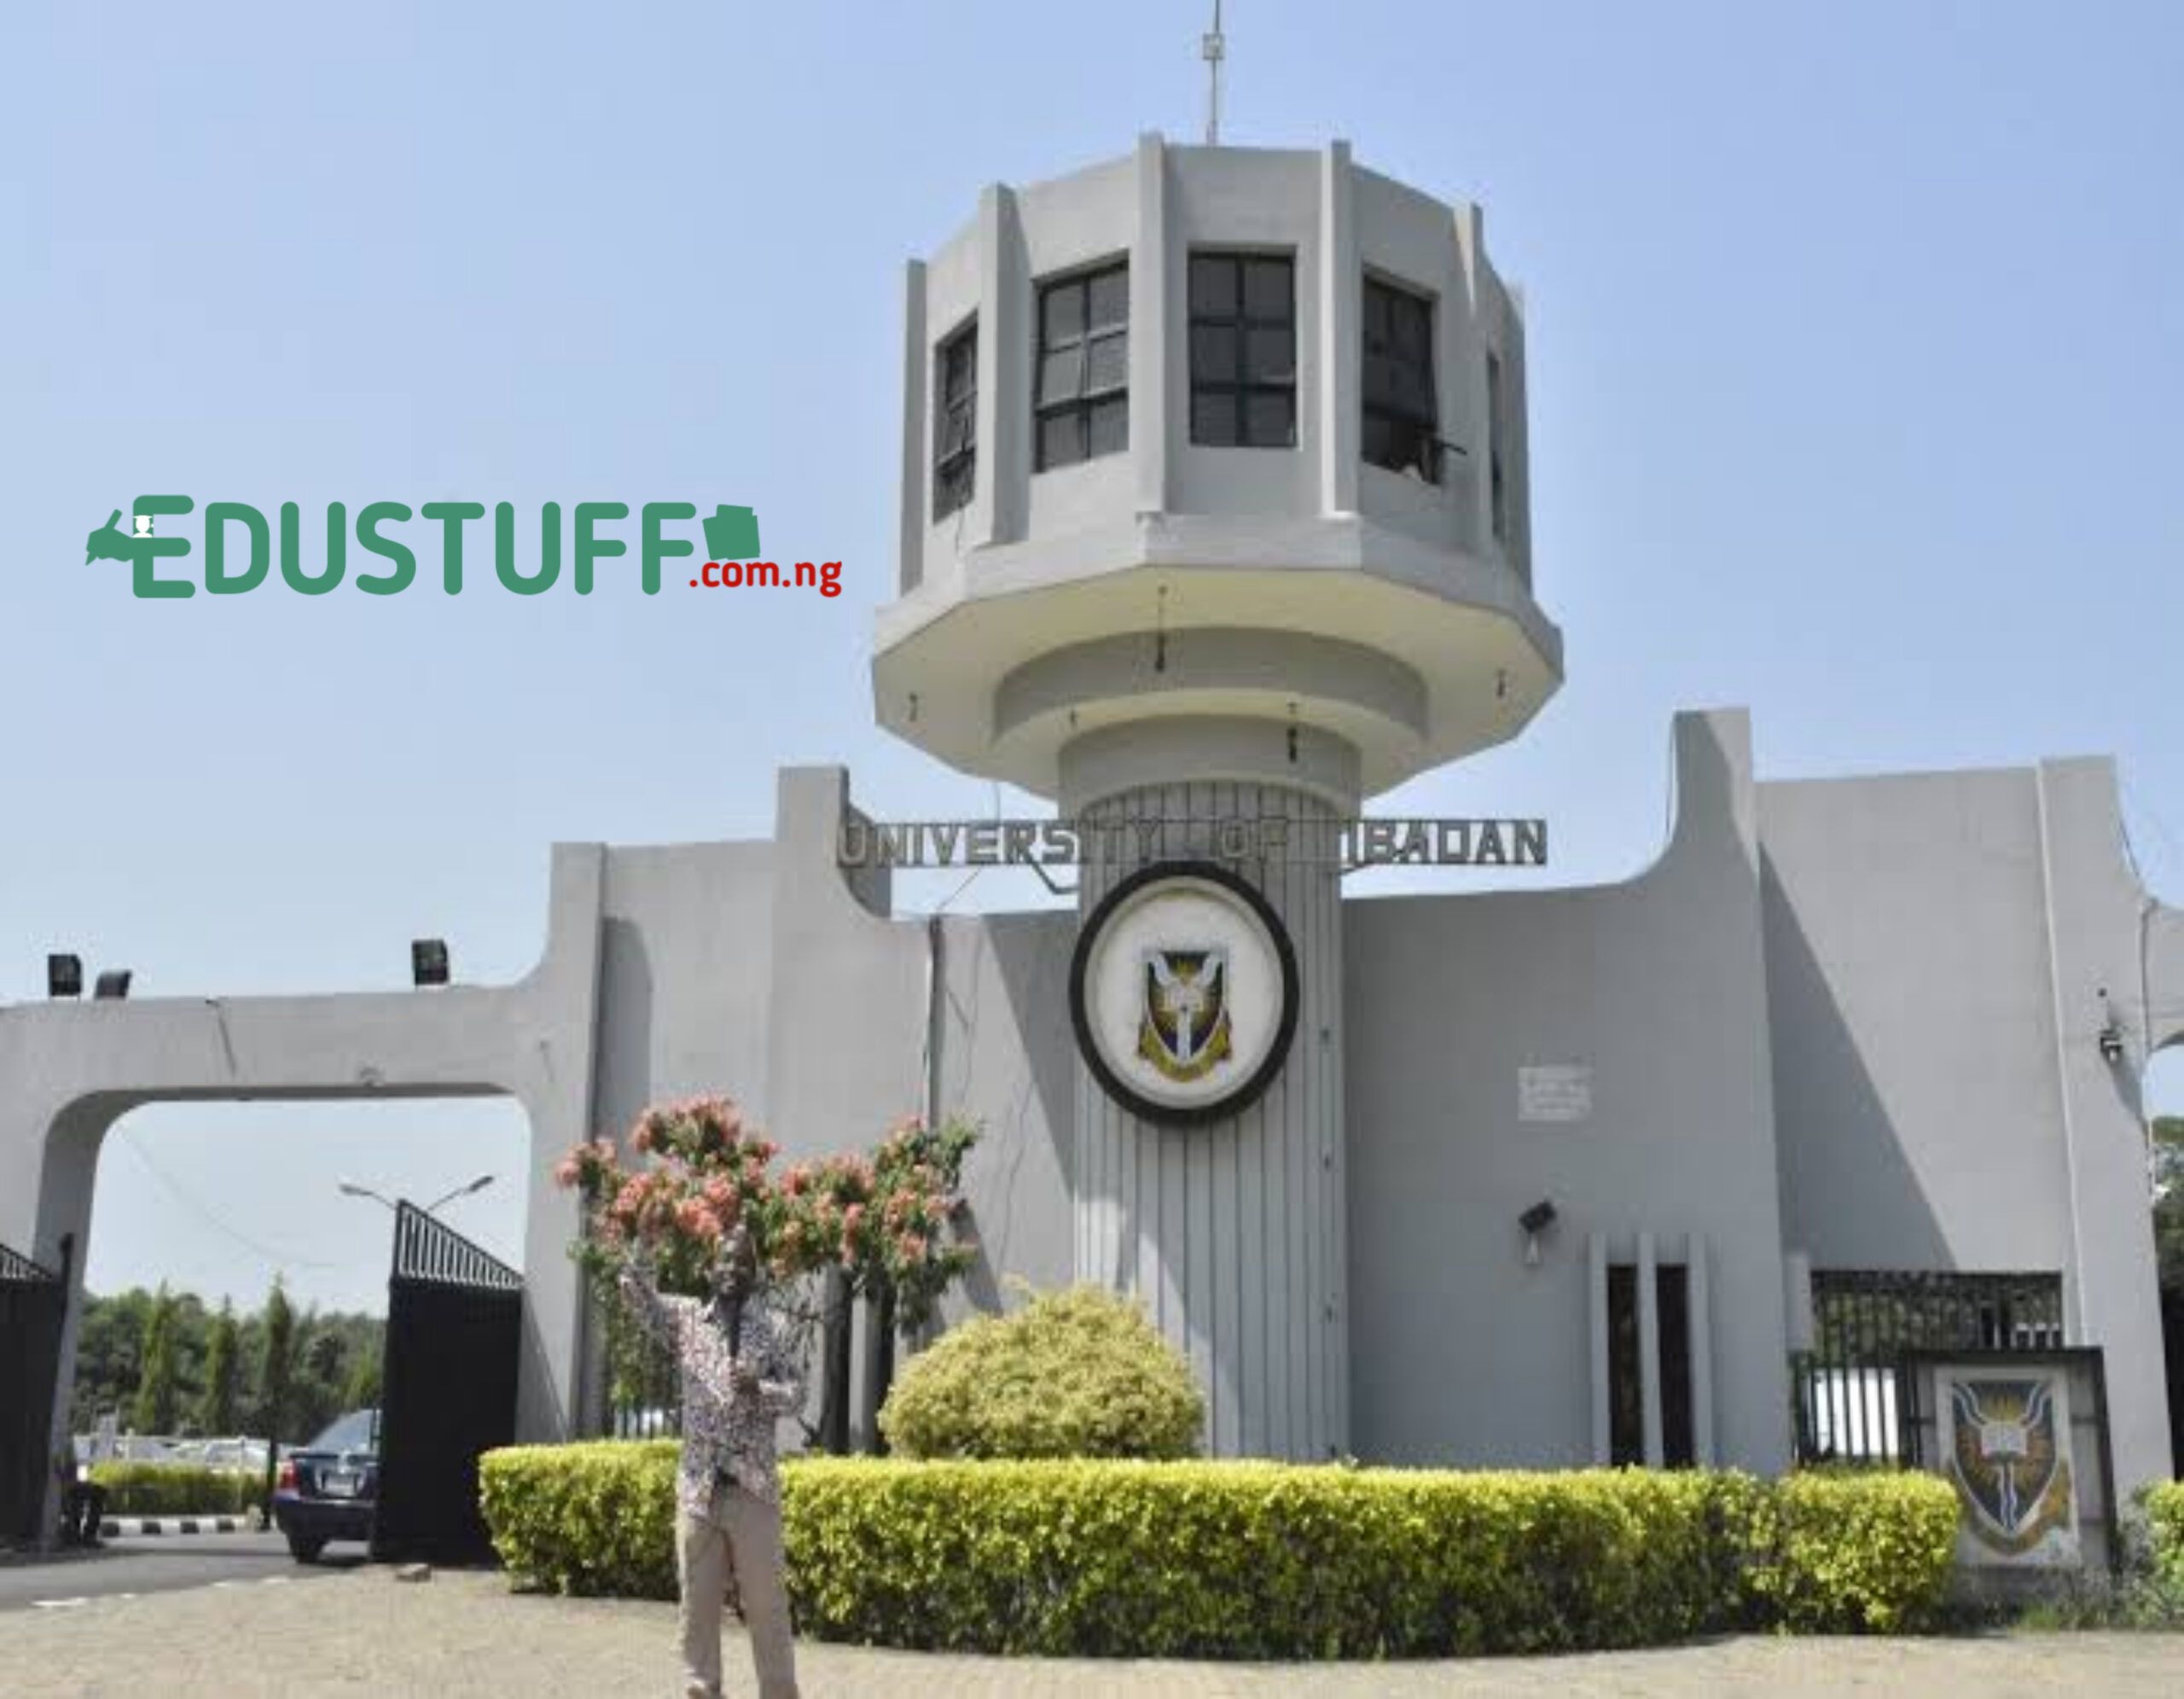 University Of Ibadan Admission Requirements 2021/2022 